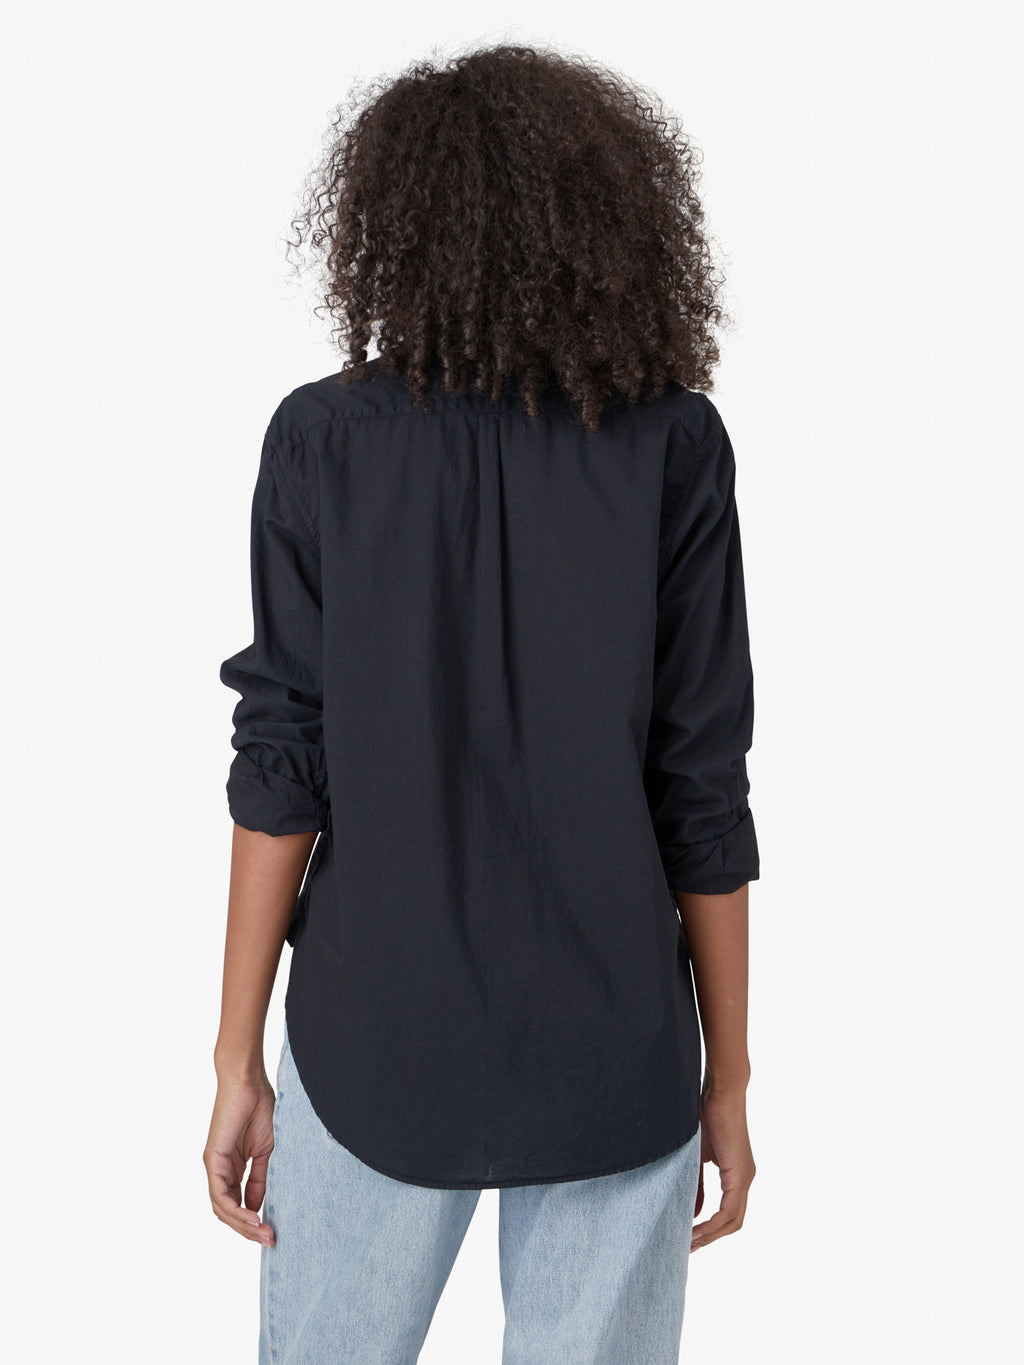 XÍRENA Beau Long Sleeve Shirt Black | TNT The New Trend